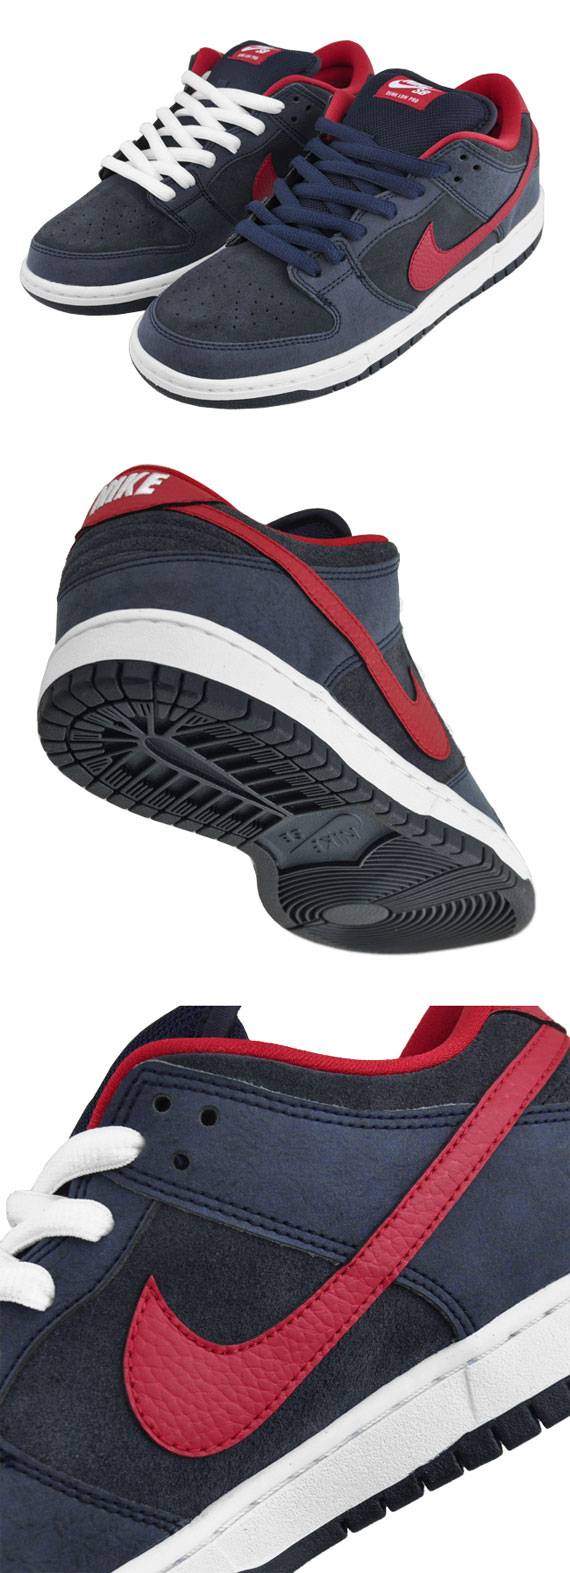 Nike SB Dunk Low - Dark Obsidian - Gym Red - White - SneakerNews.com